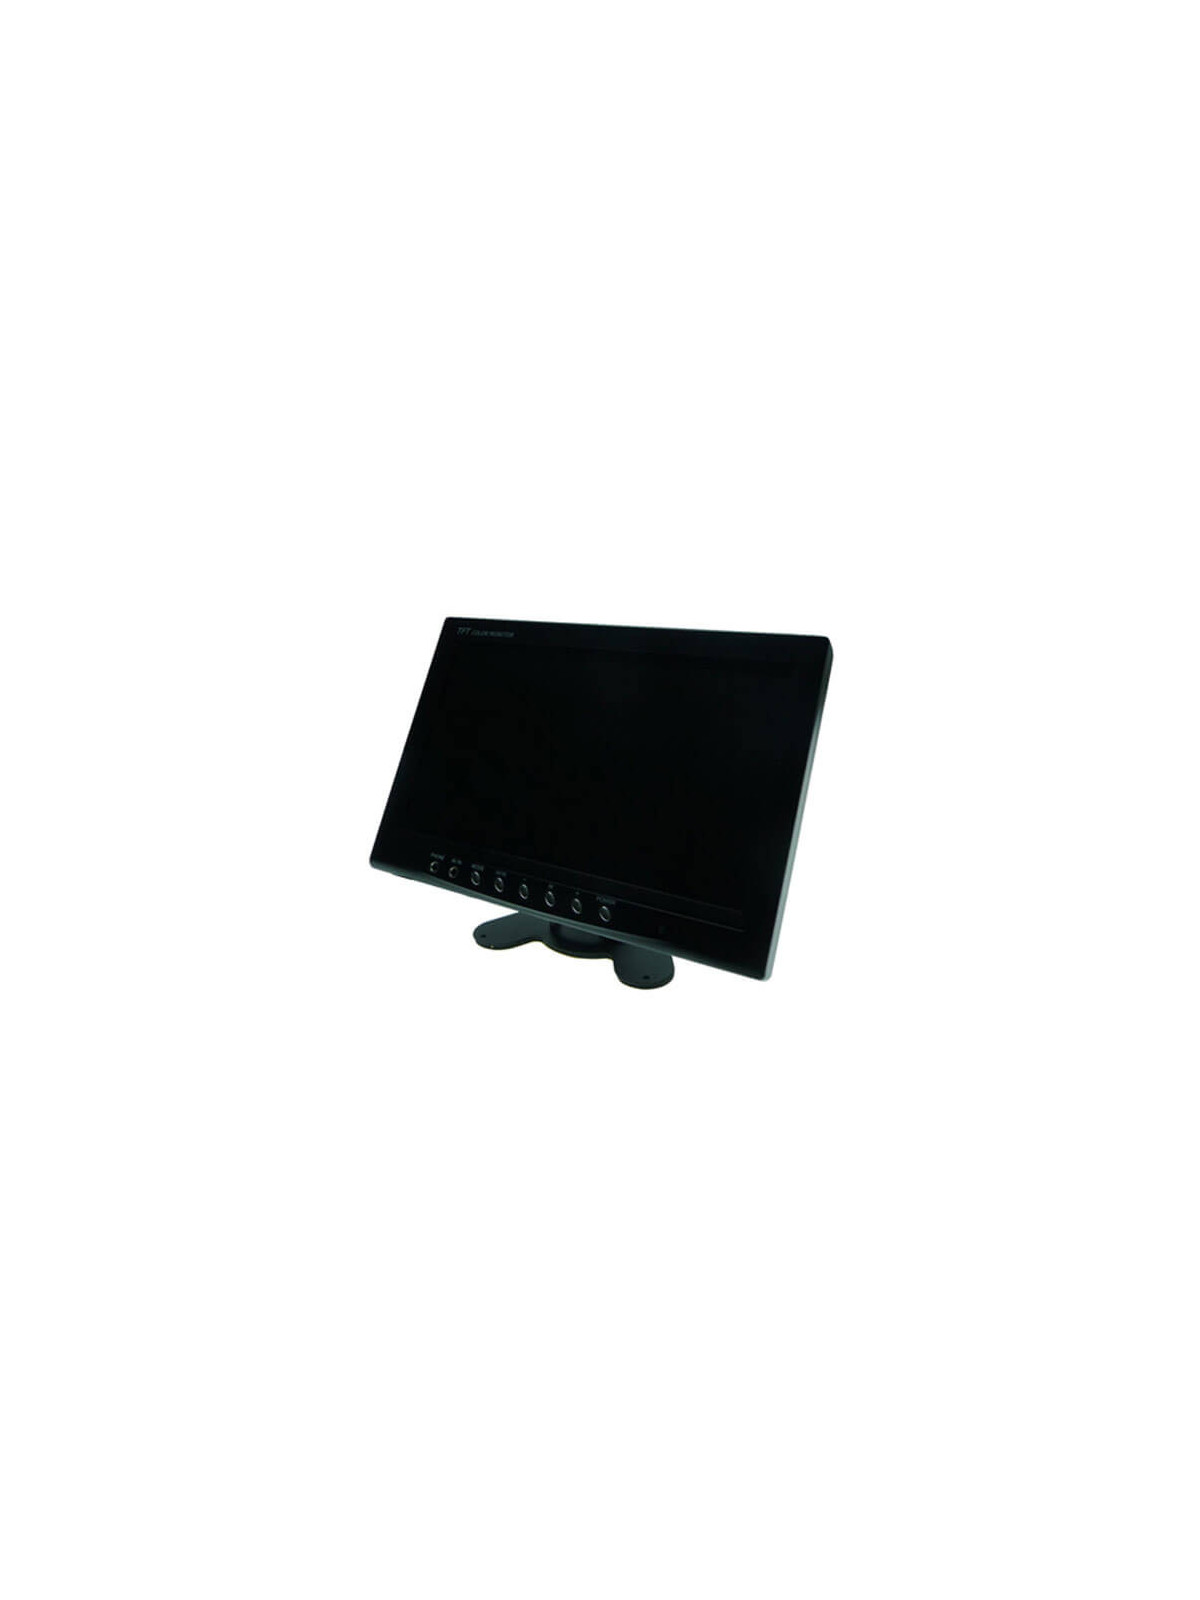 Pantalla LCD  9" para cámara trasera LS9003 800x480 RCAx2 Audio 12/24V